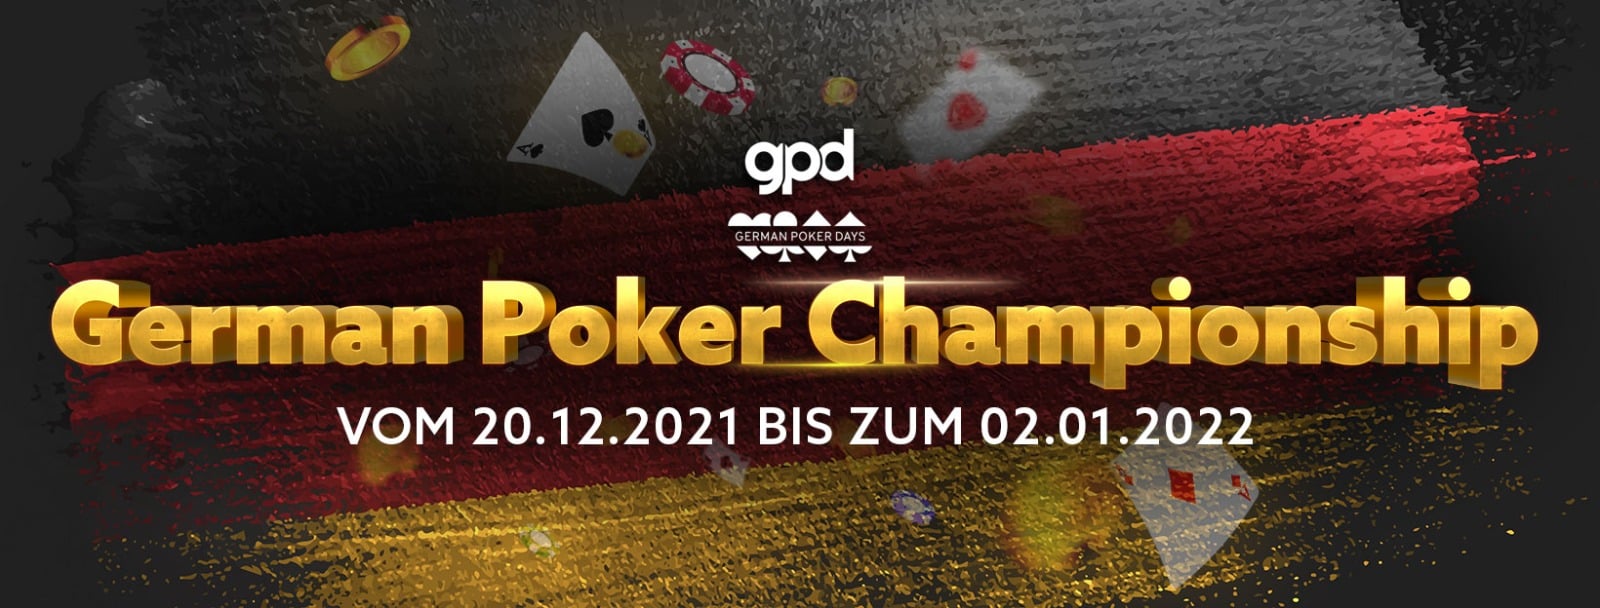 German Poker Championship – Starttag 1